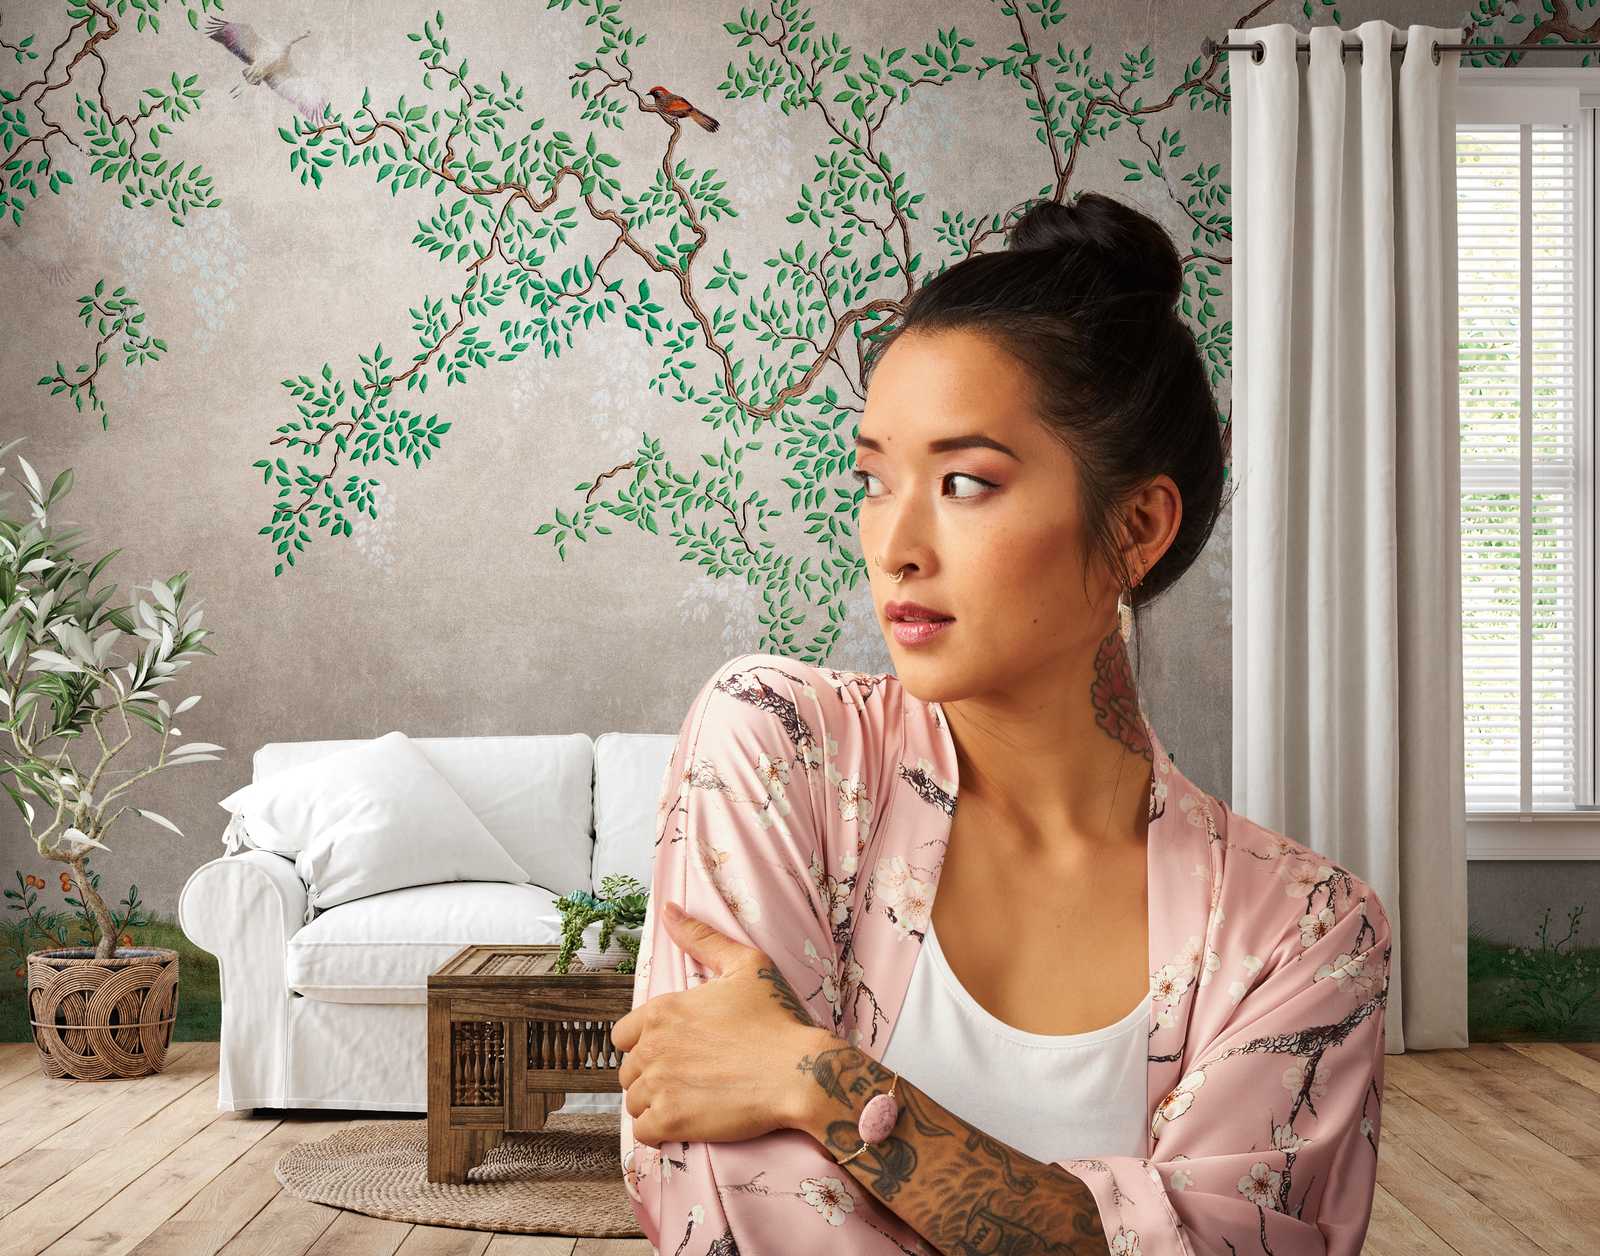             Wallpaper novelty | motif wallpaper nature design in Asian look
        